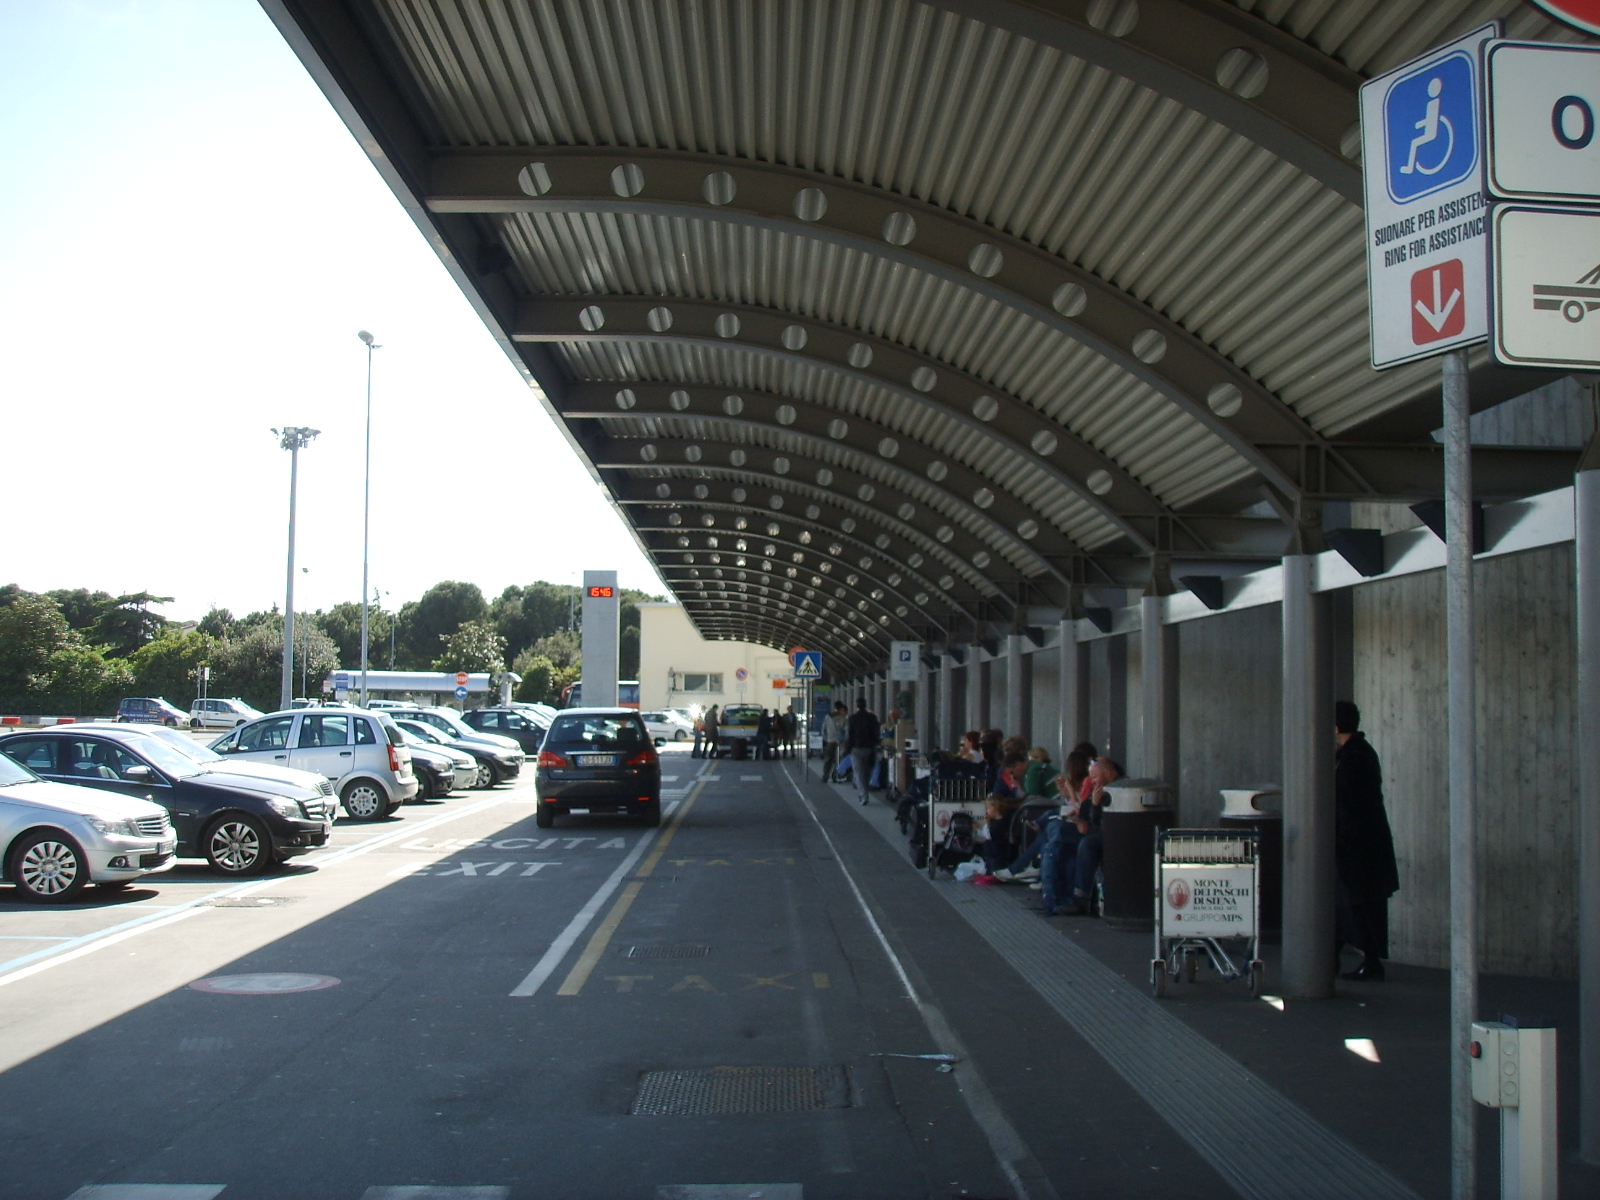 Aeroporto de Florença Americo Vespucci